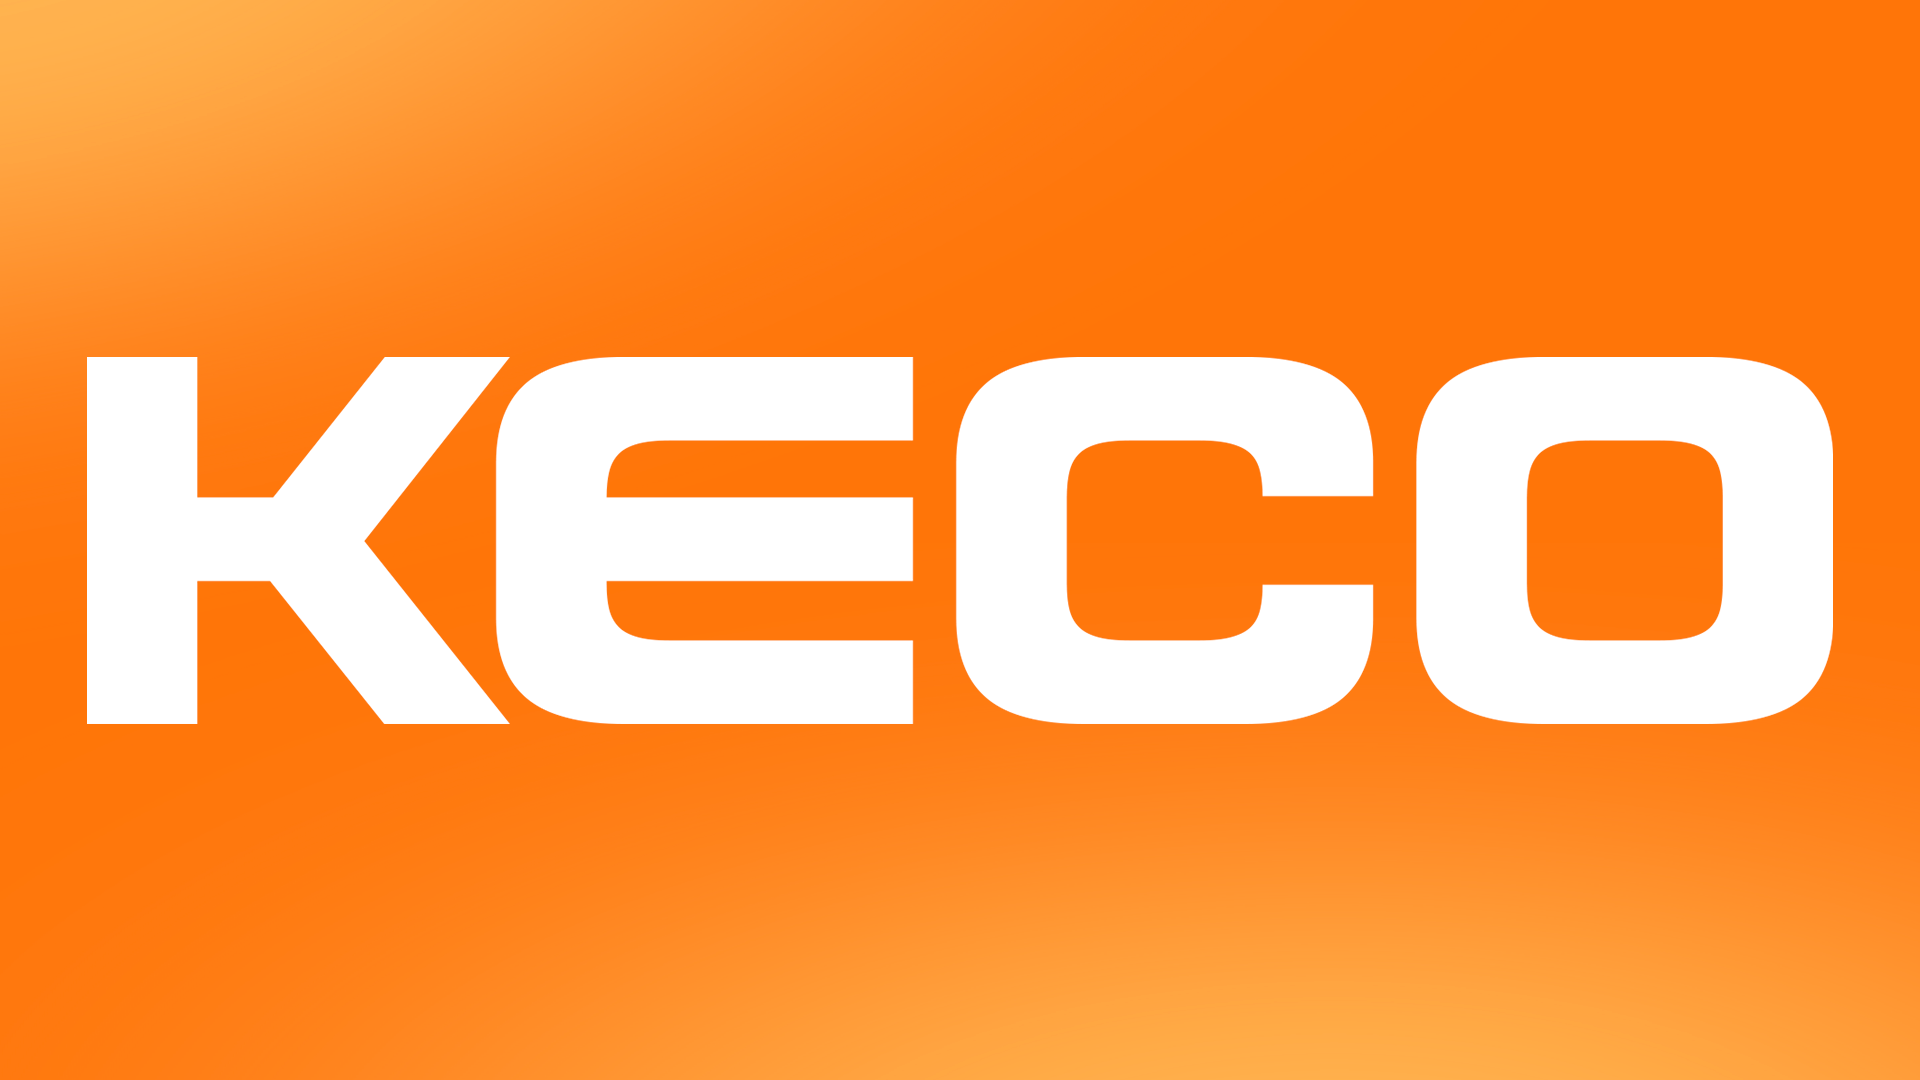 Meet Keco, Alutal's new partner in the process analytics segment